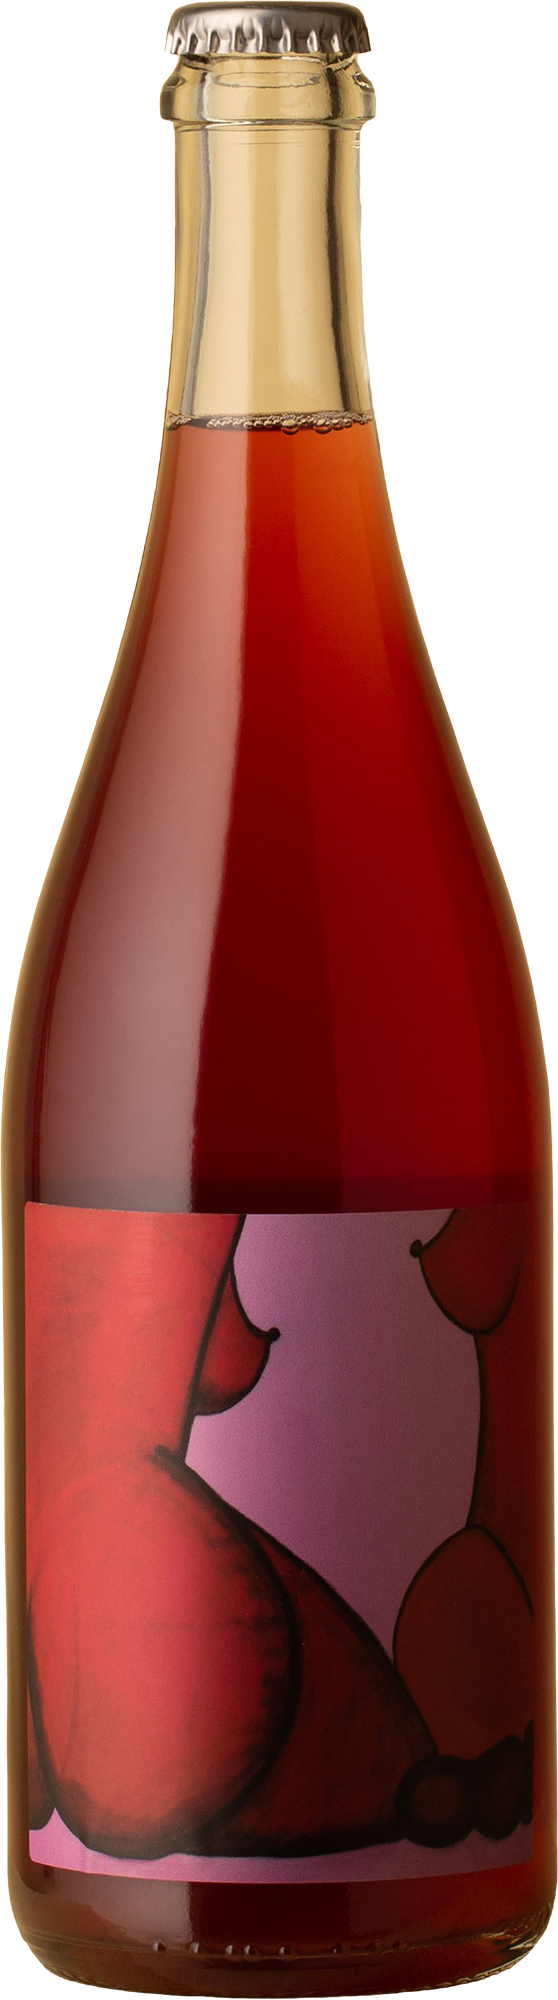 Trutta - Rose Pét Nat 2021 Sparkling Wine